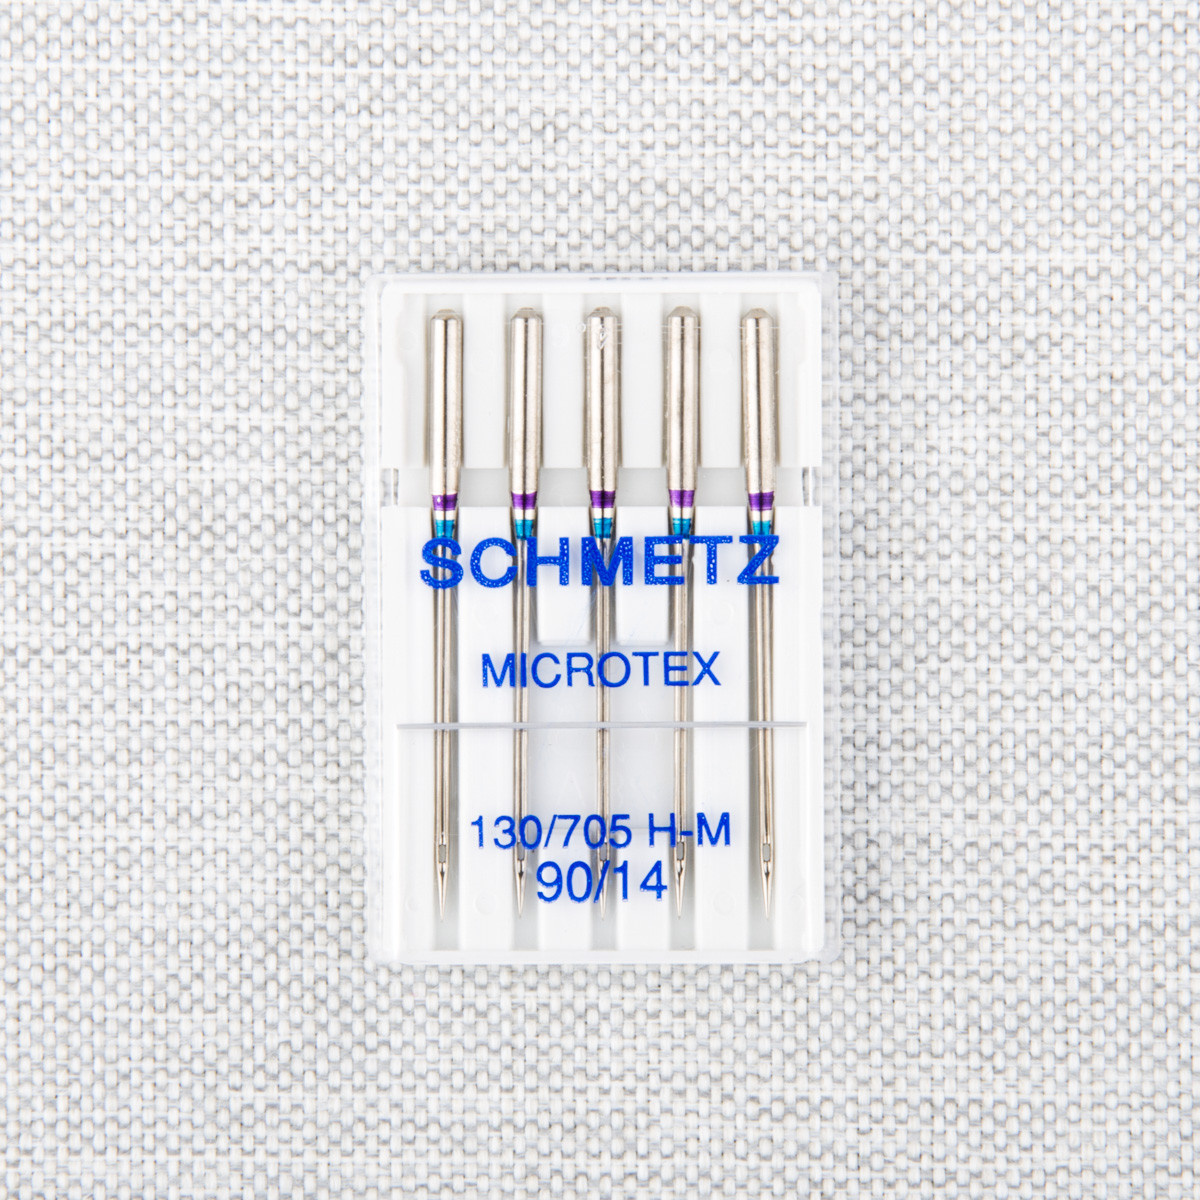 Schmetz Schmetz #1731 microtex needles carded - 90/14 - 5 count